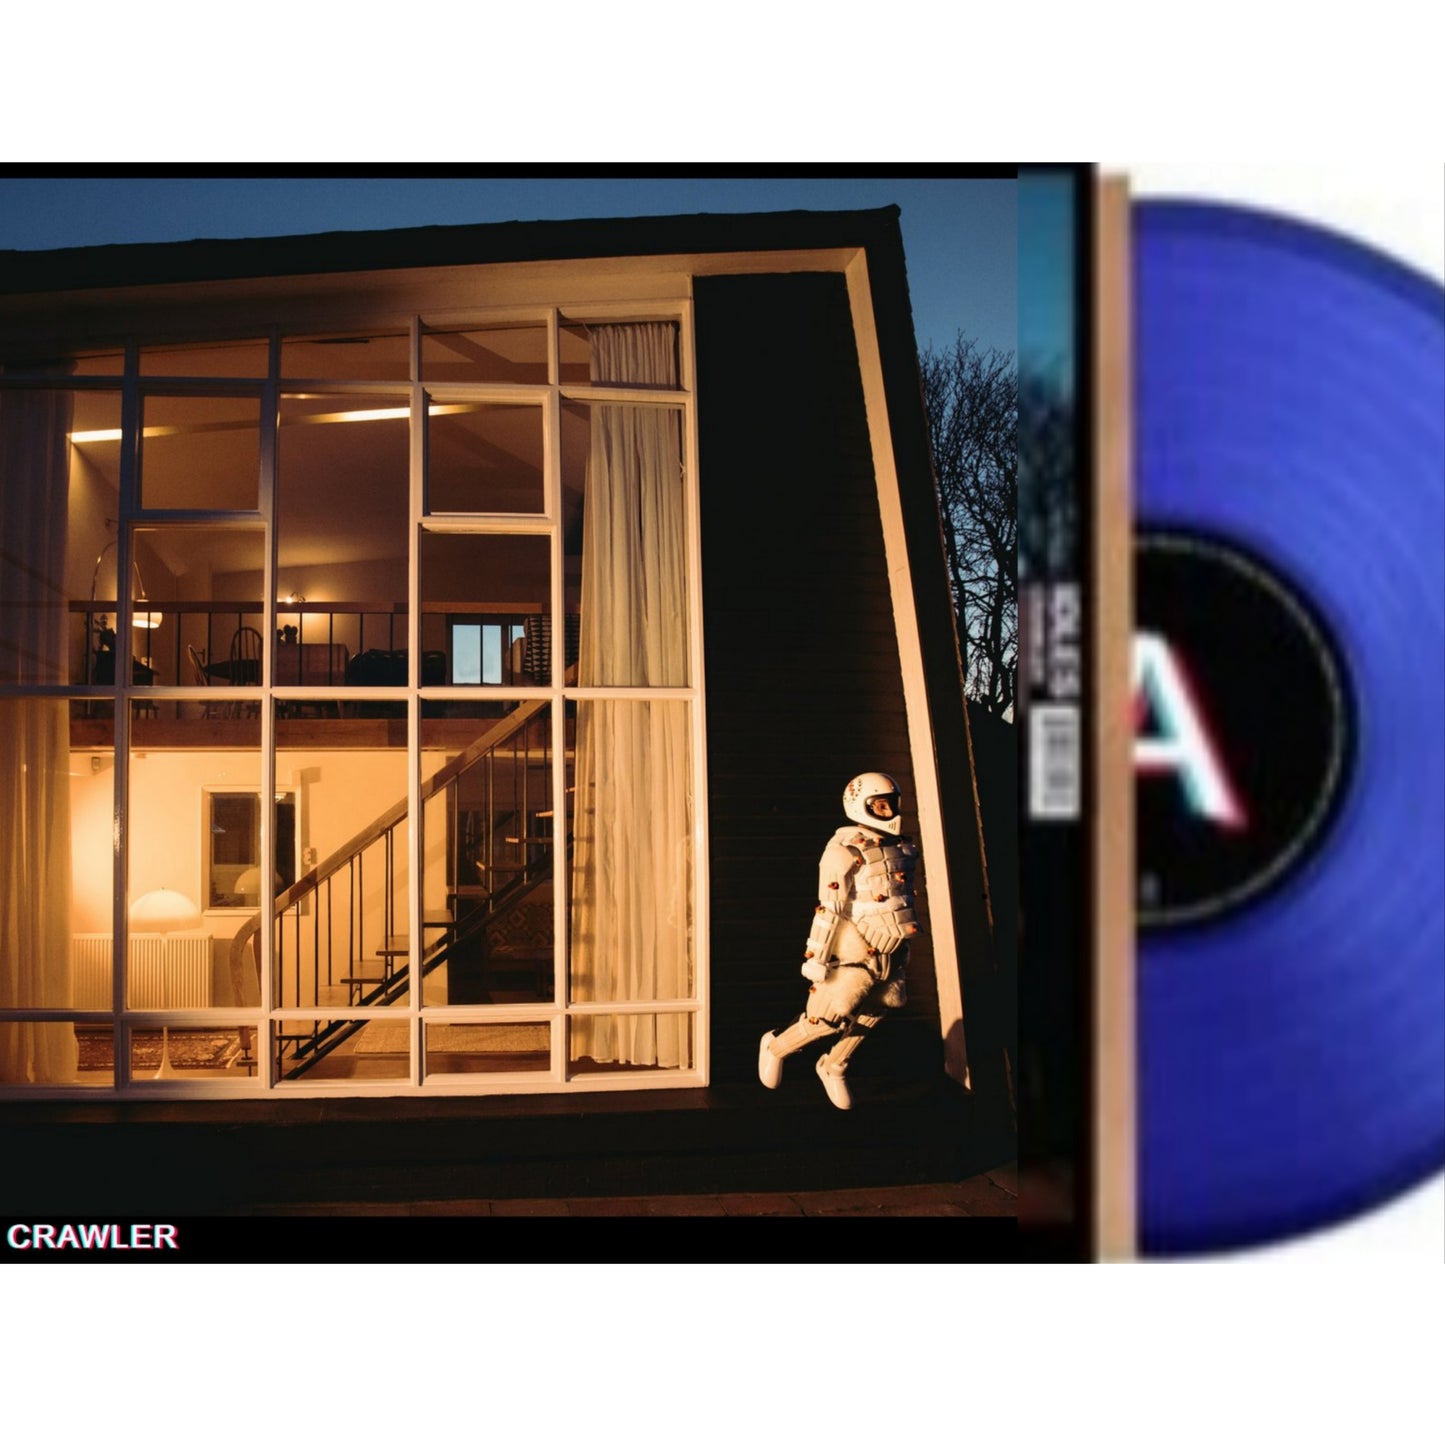 Idles: Crawler Blue Vinyl - Limited Edition Translucent Blue Vinyl LP